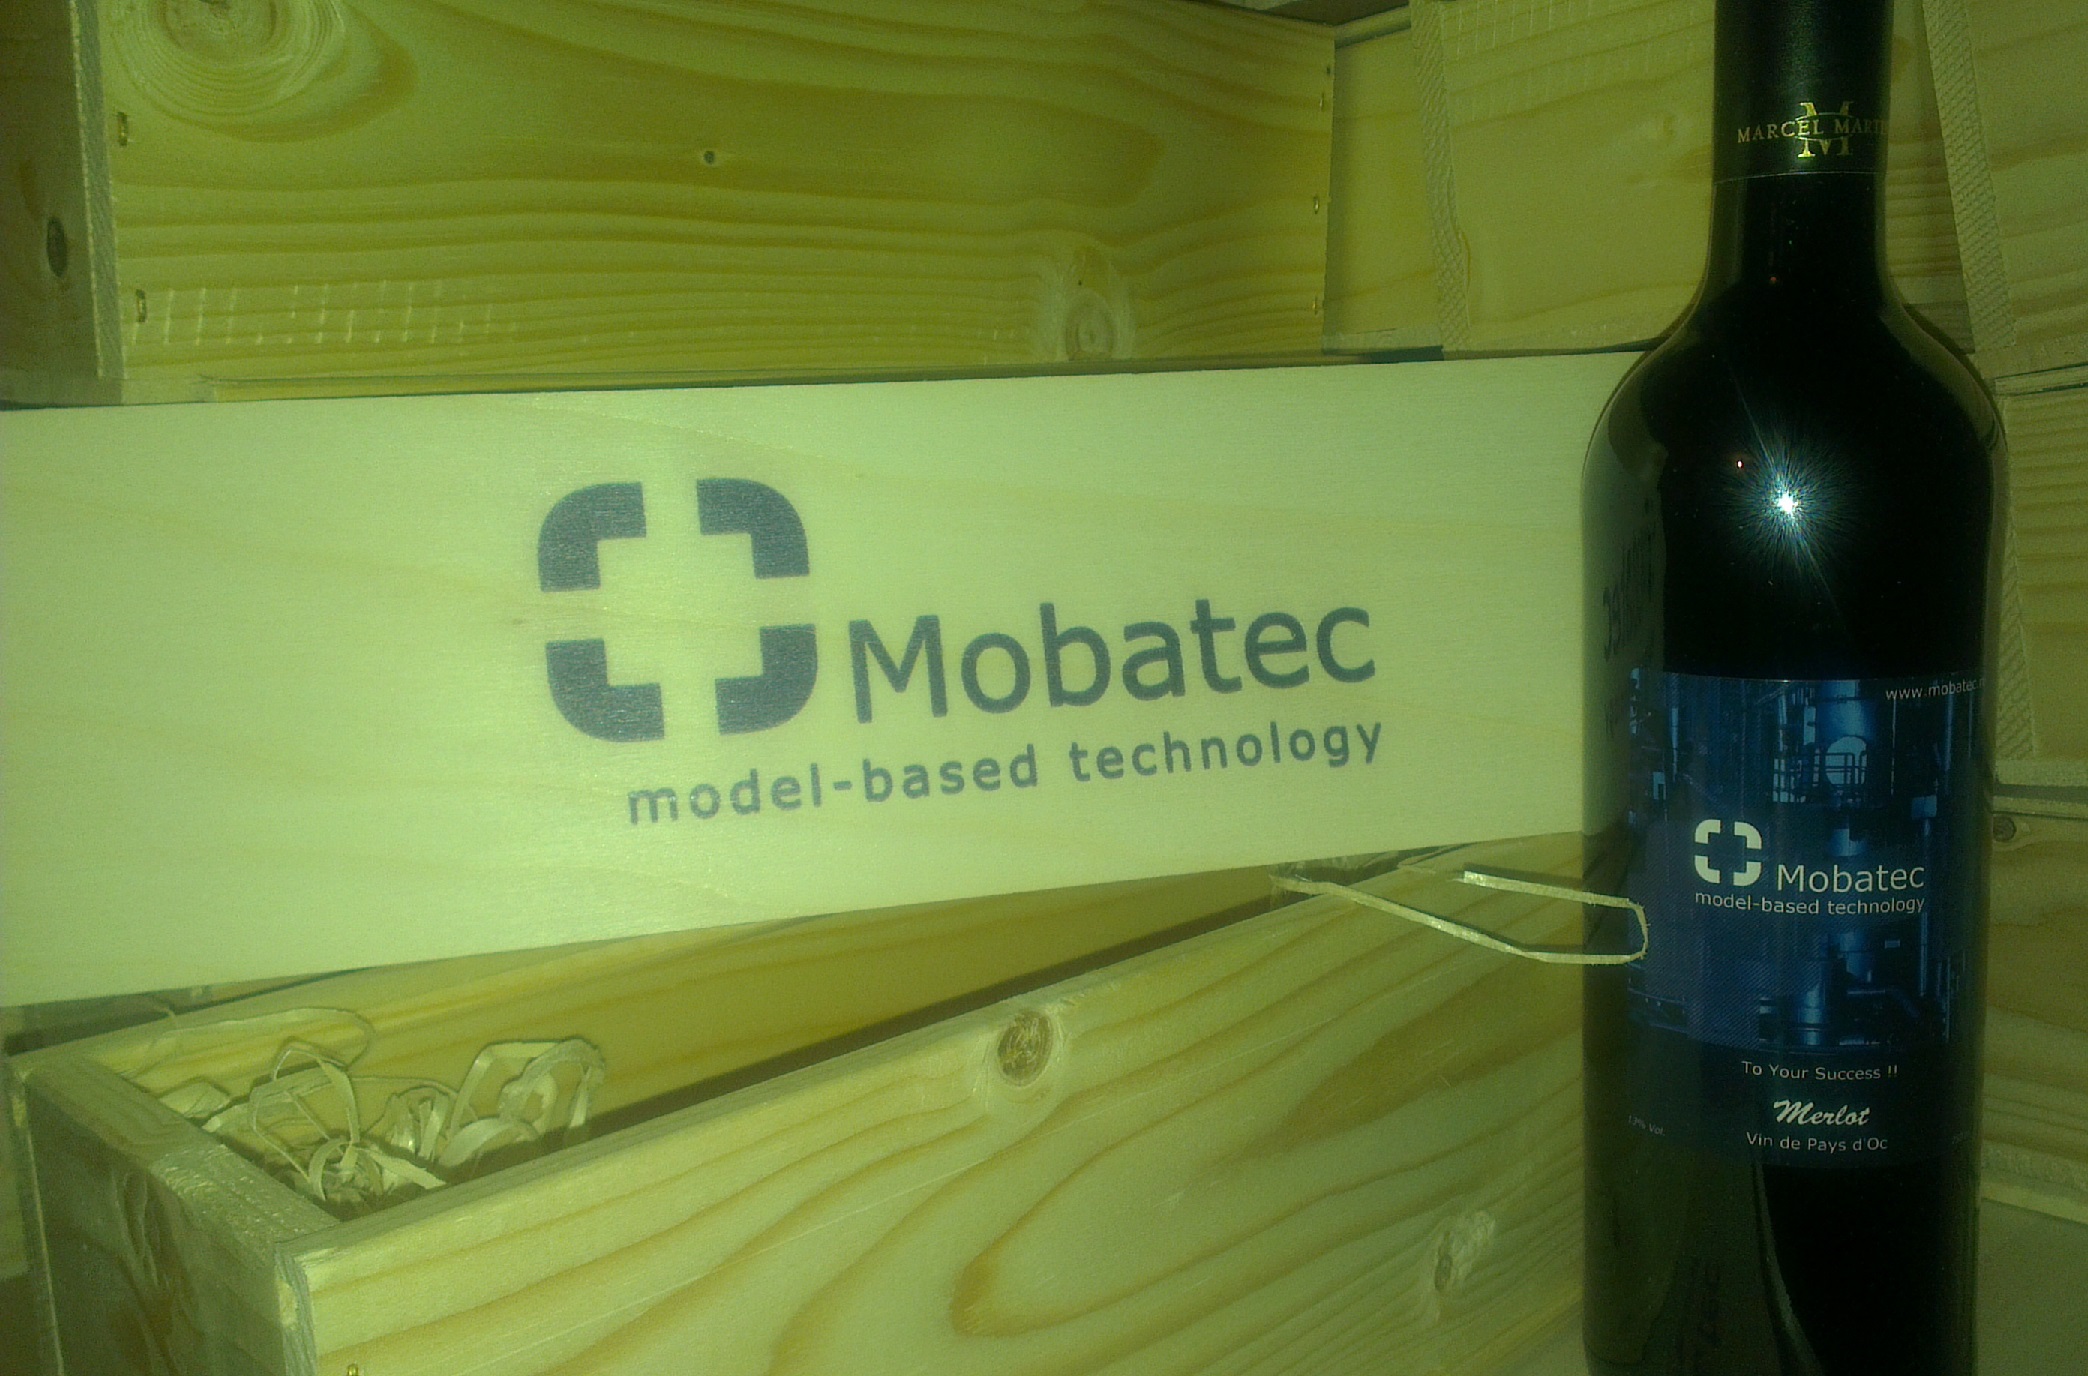 Mobatec Wine